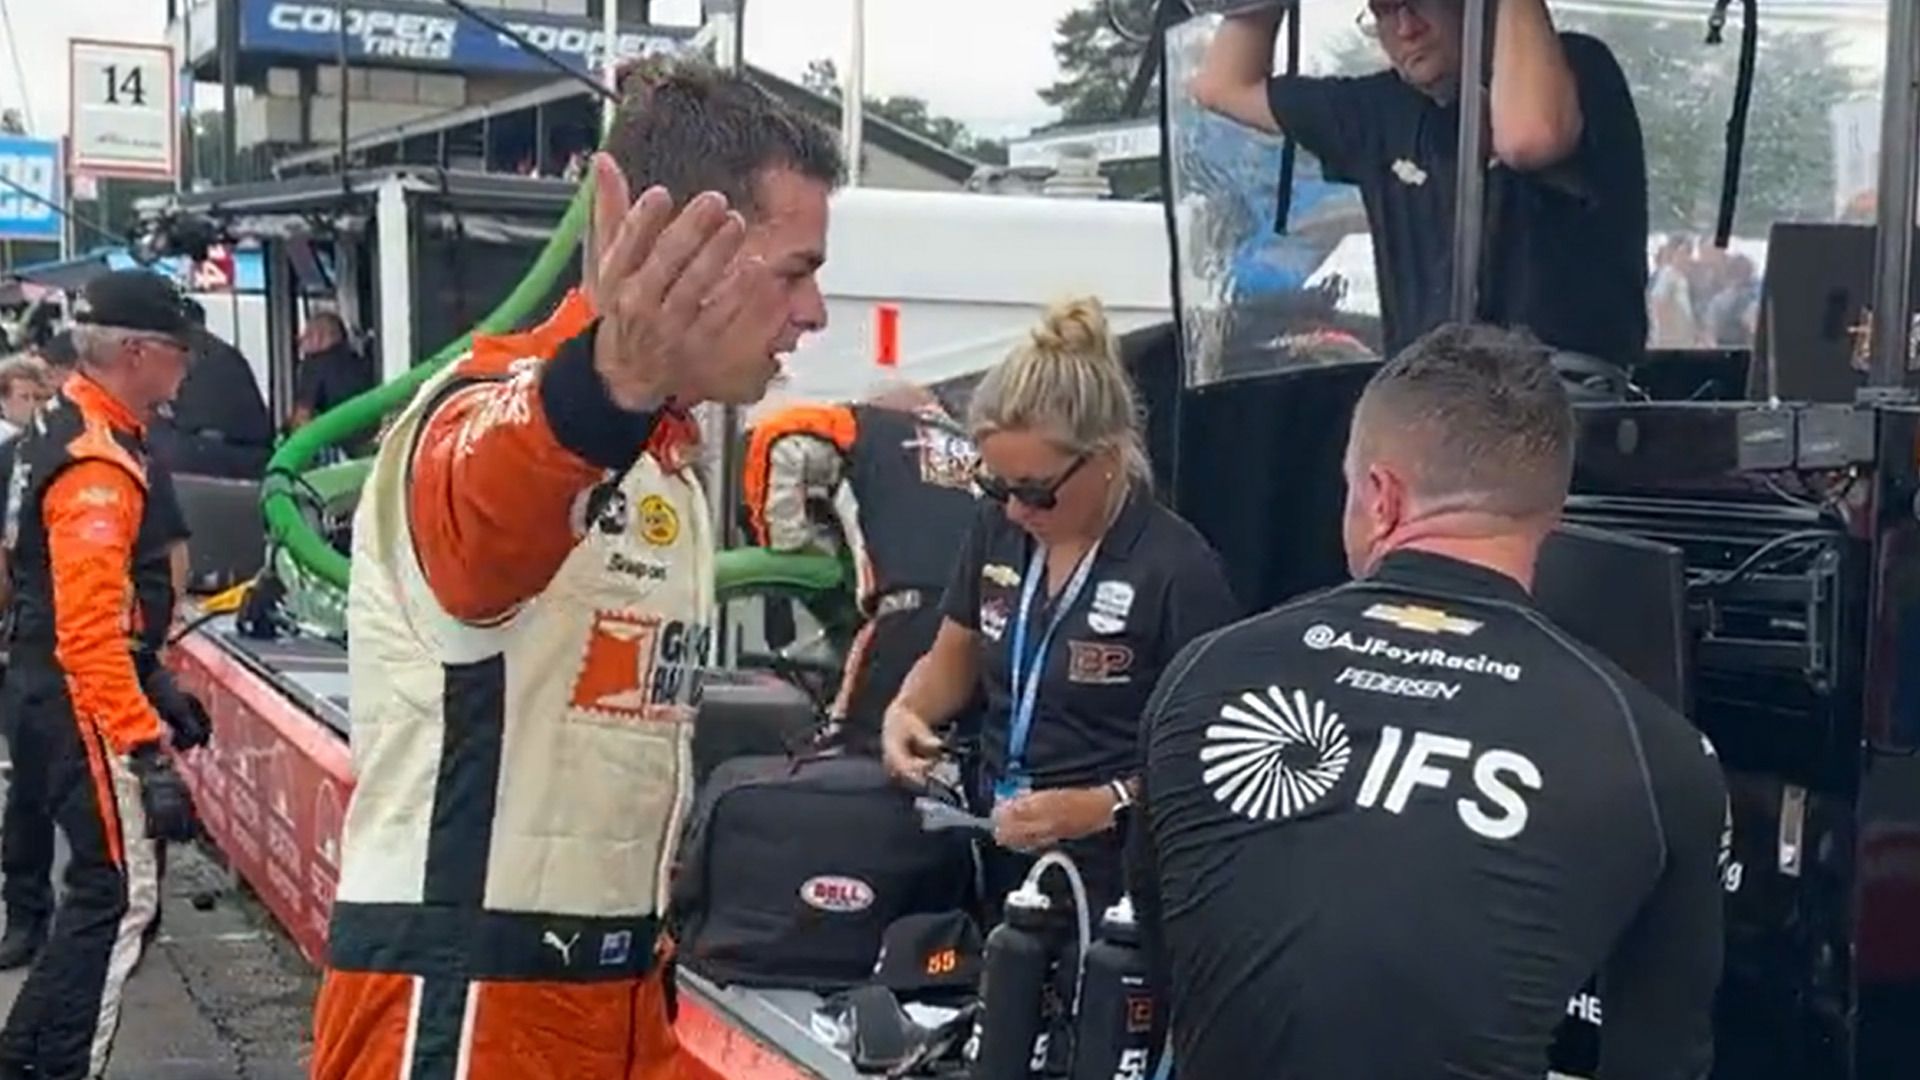 Scott McLaughlin speaks to Benjamin Pedersen after the IndyCar race at Mid-Ohio.